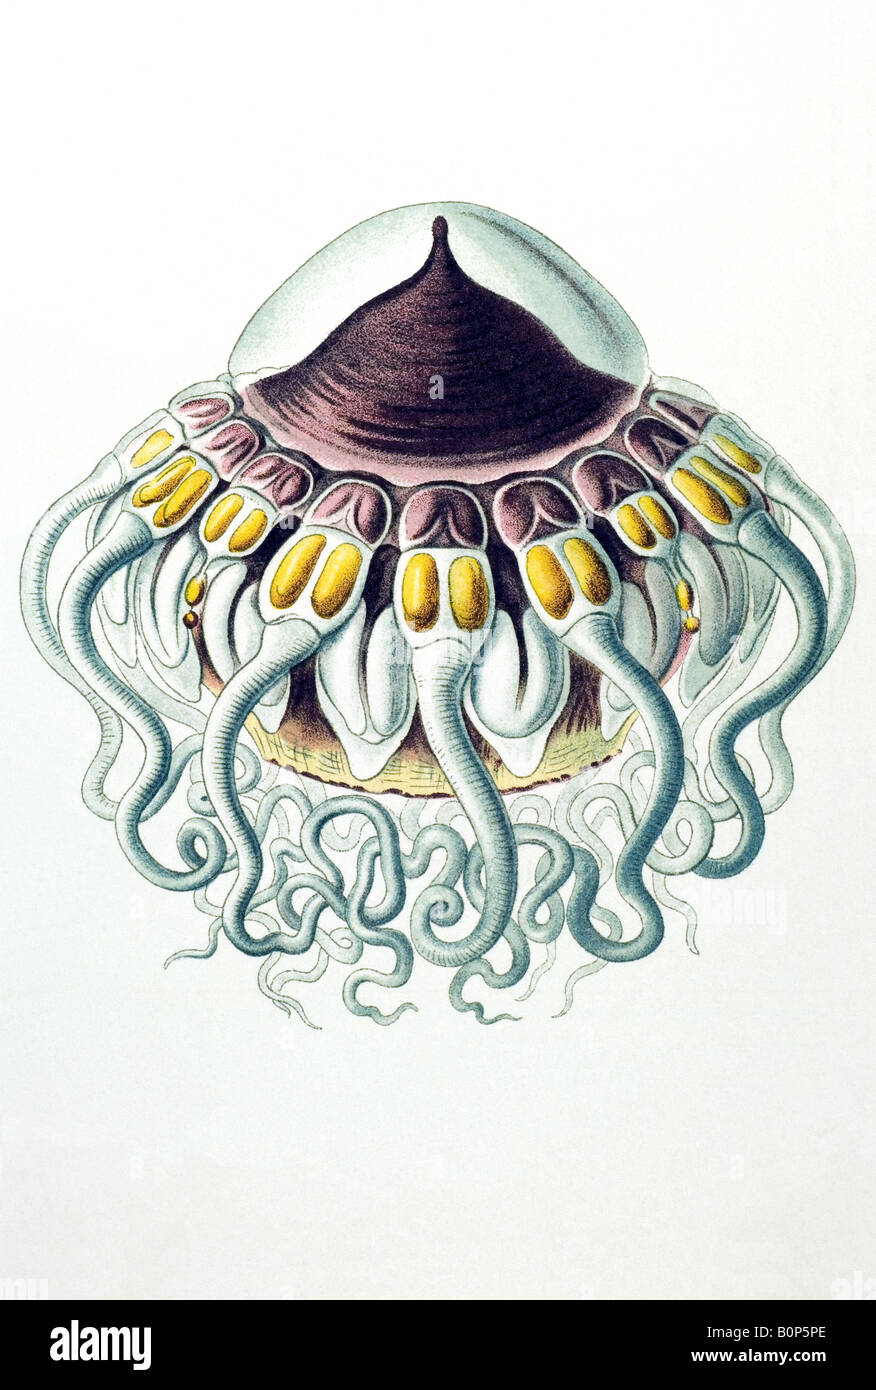 Peromedusae Coronatae Periphylla Peronii, Nom, Haeckel, l'Europe du 20e siècle art nouveau Banque D'Images